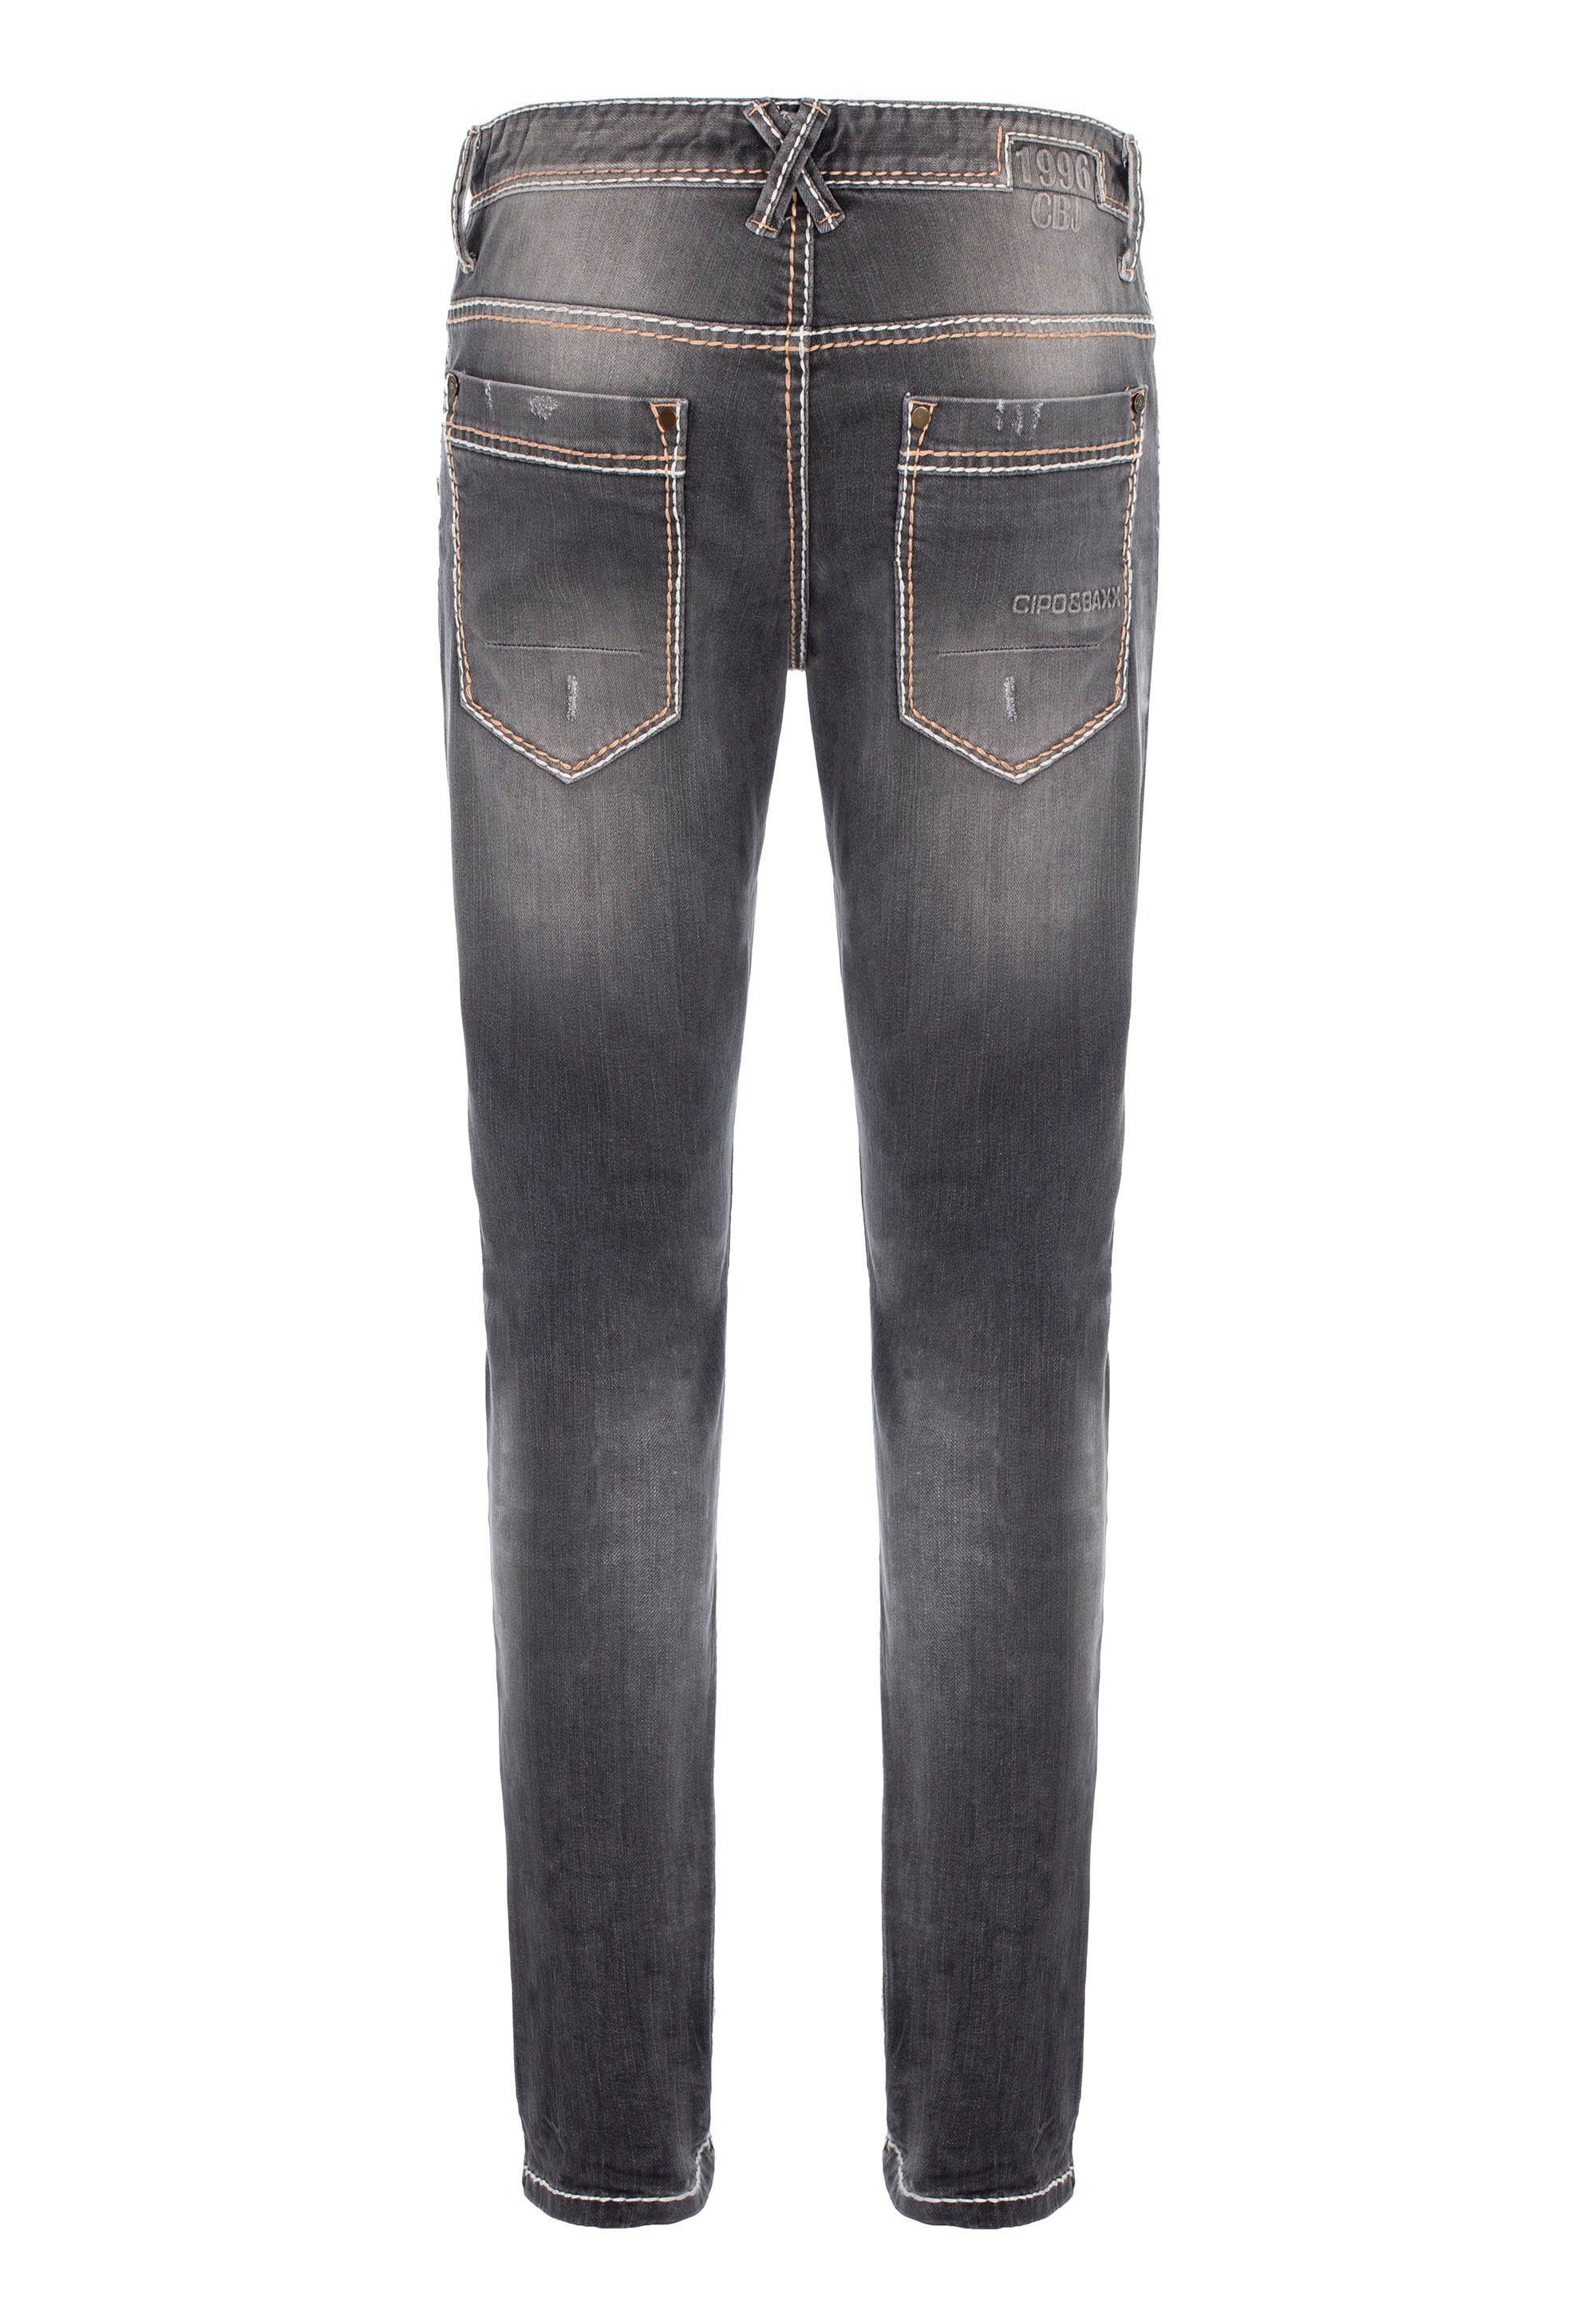 Cipo & modernem Jeans in Straight Fit-Schnitt CD668 Baxx Bequeme